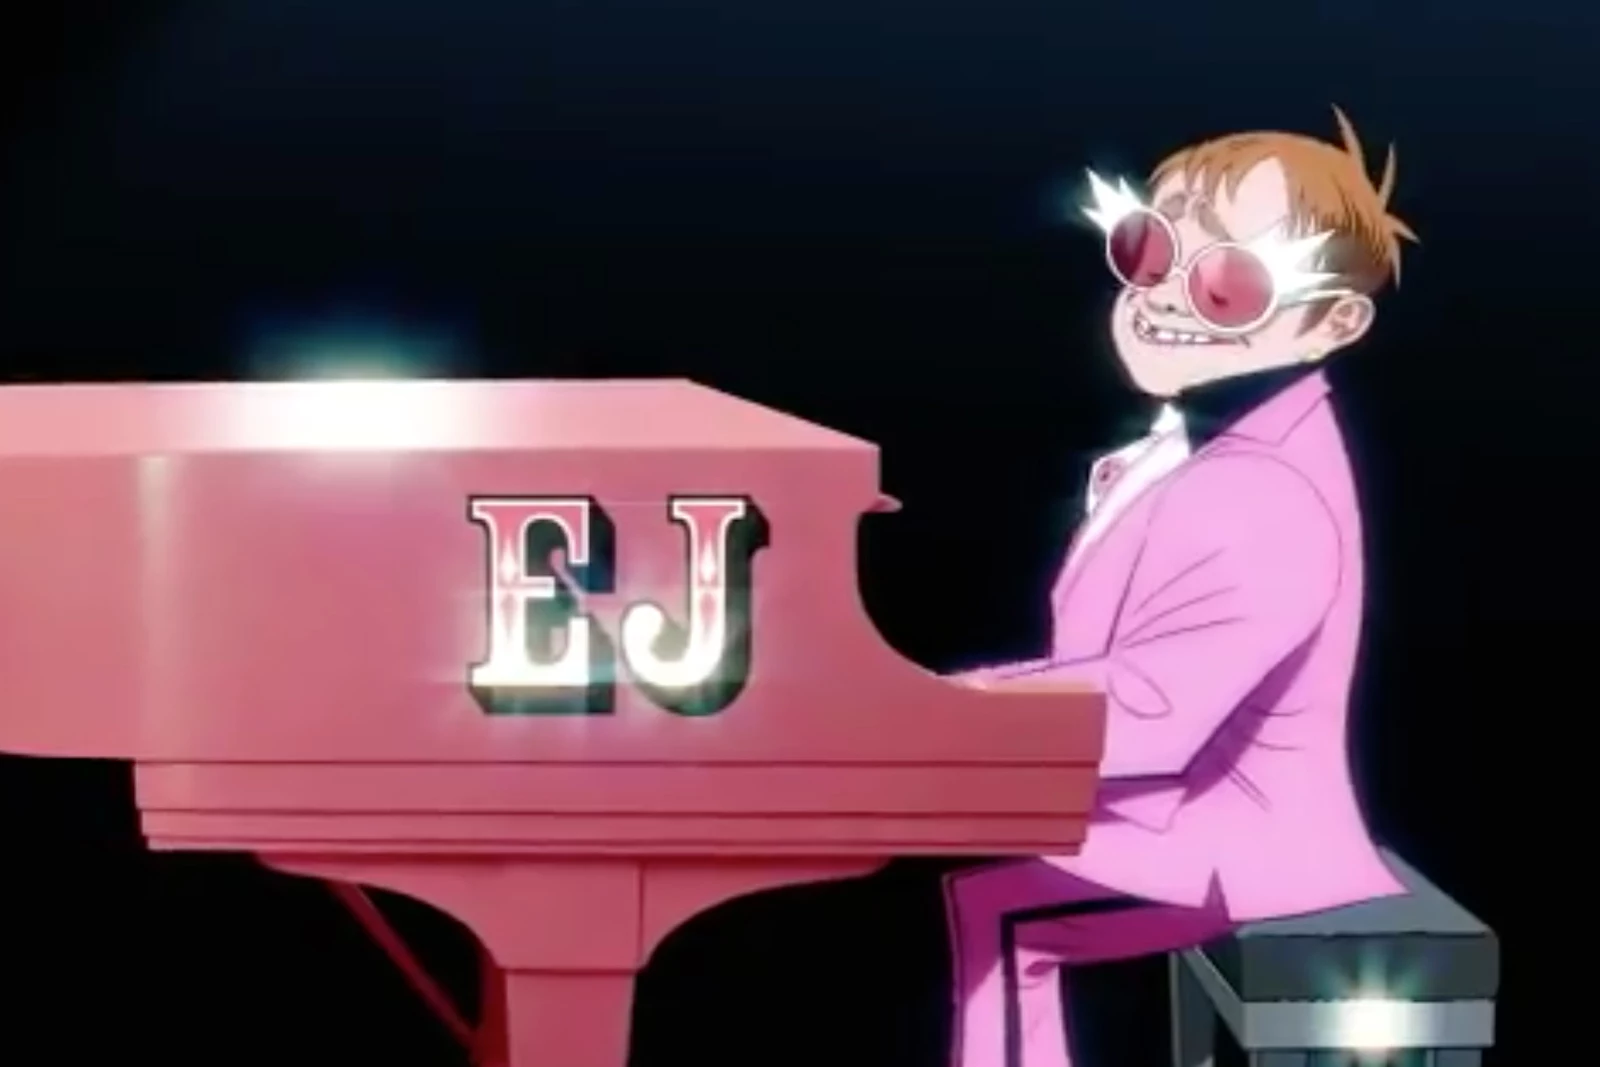 Hear Elton John S New Song With Gorillaz The Pink Phantom